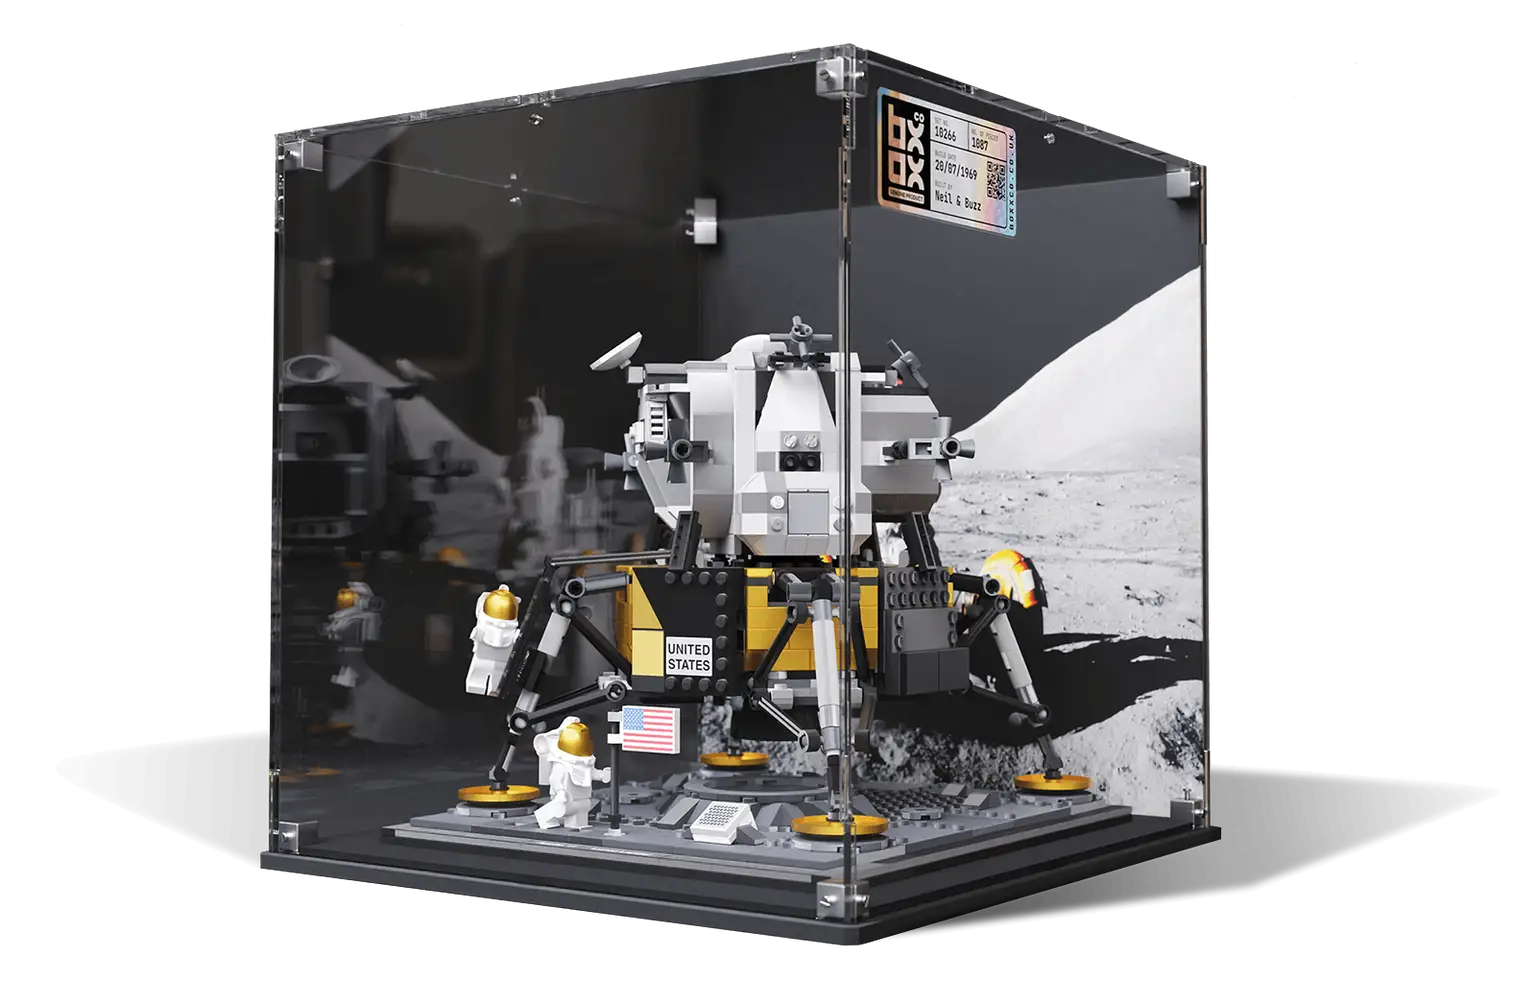 Display case containing NASA lunar landing lego set